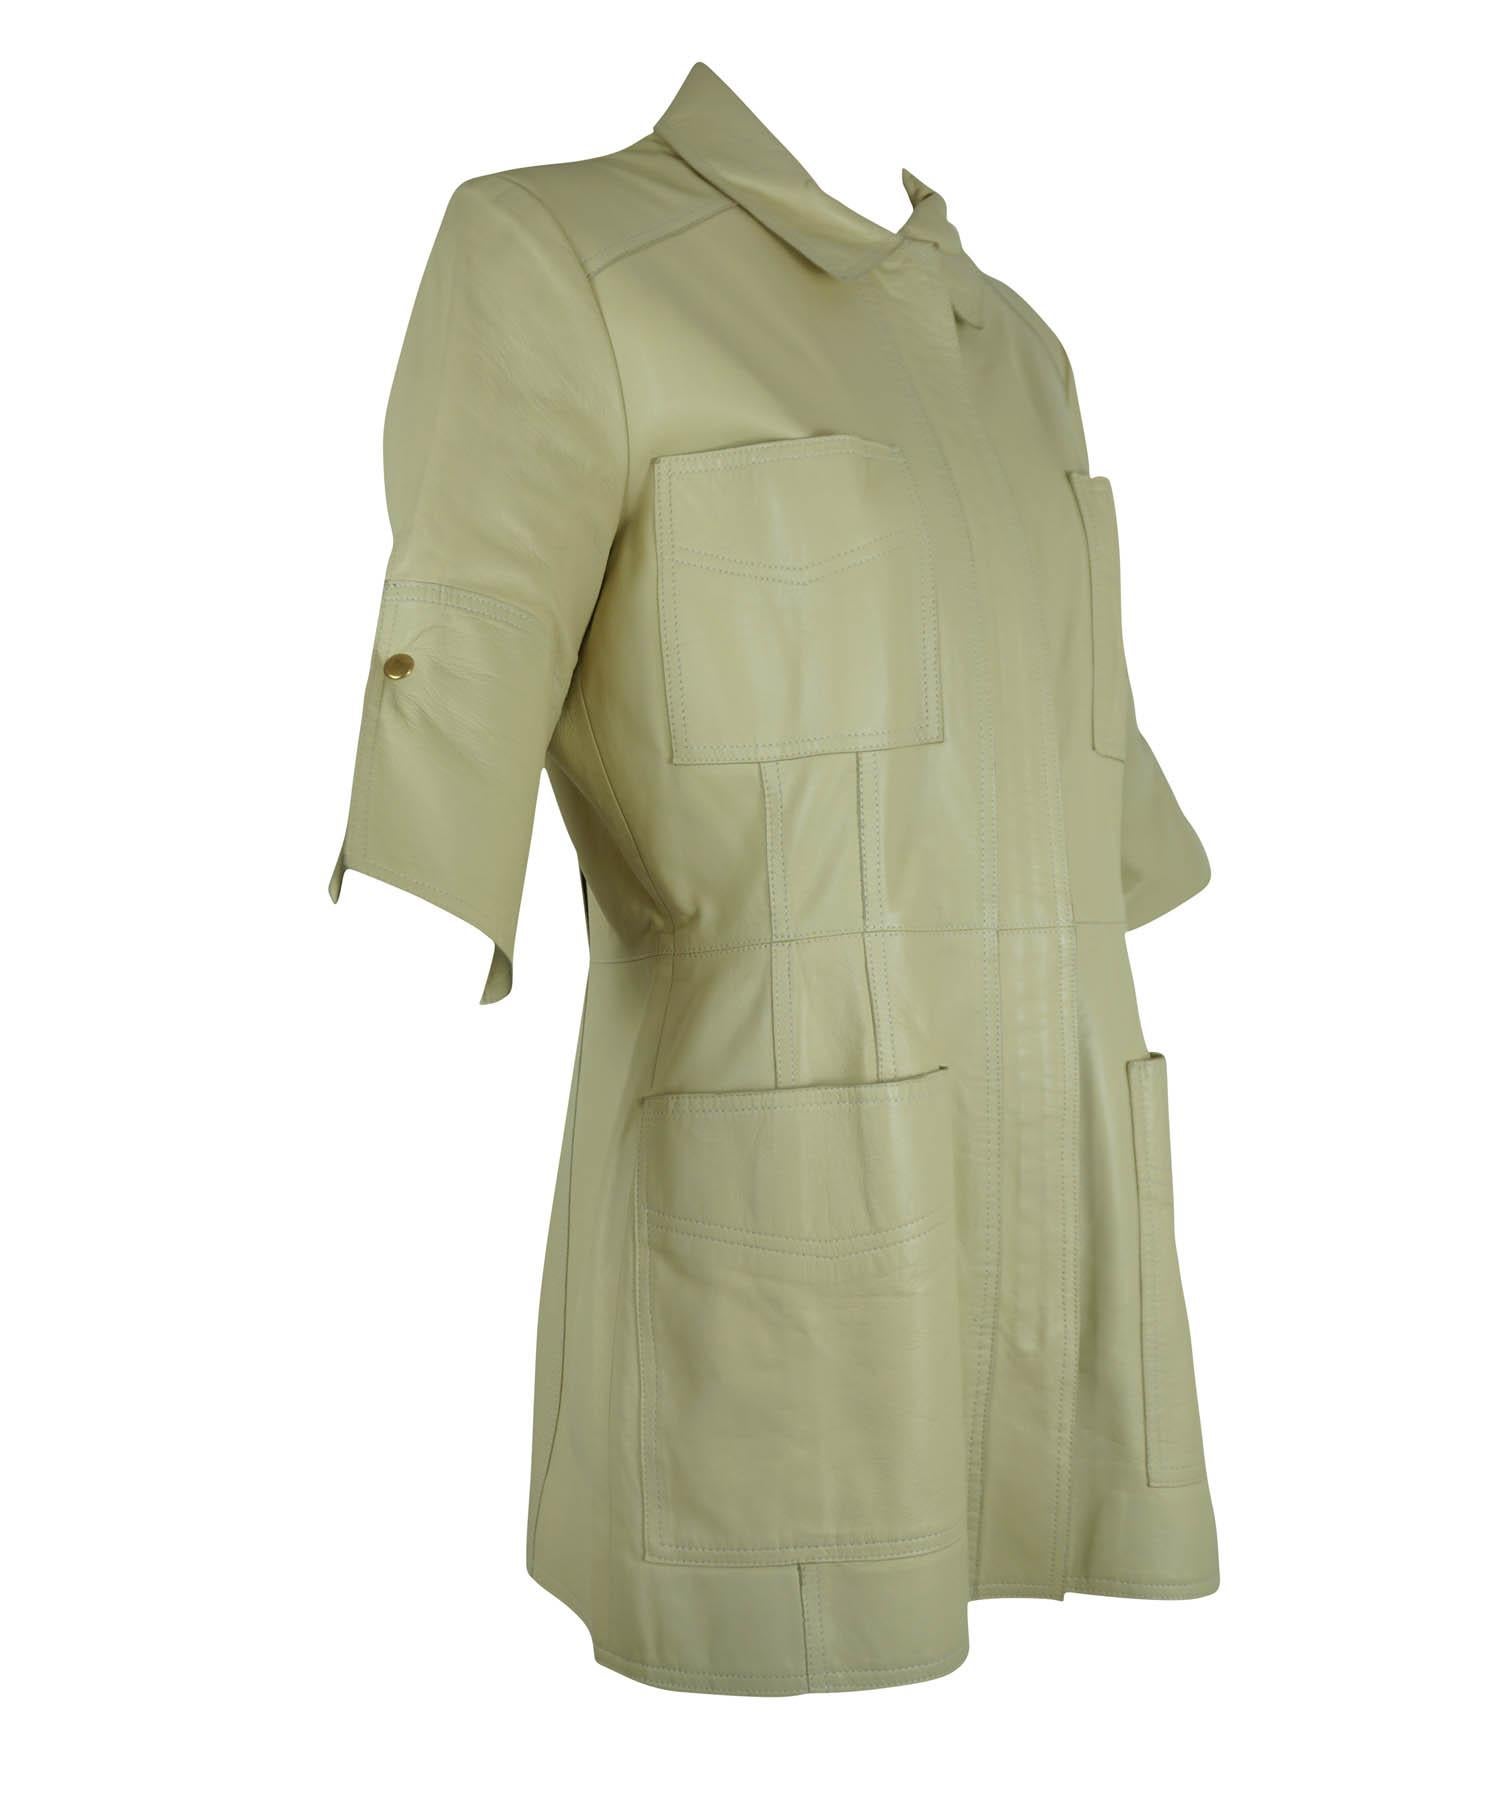 Oscar de la Renta 3/4 sleeve tan leather jacket. Designer size 4. Made in USA.



Condition - Excellent.


Measurements:

Shoulder: 16